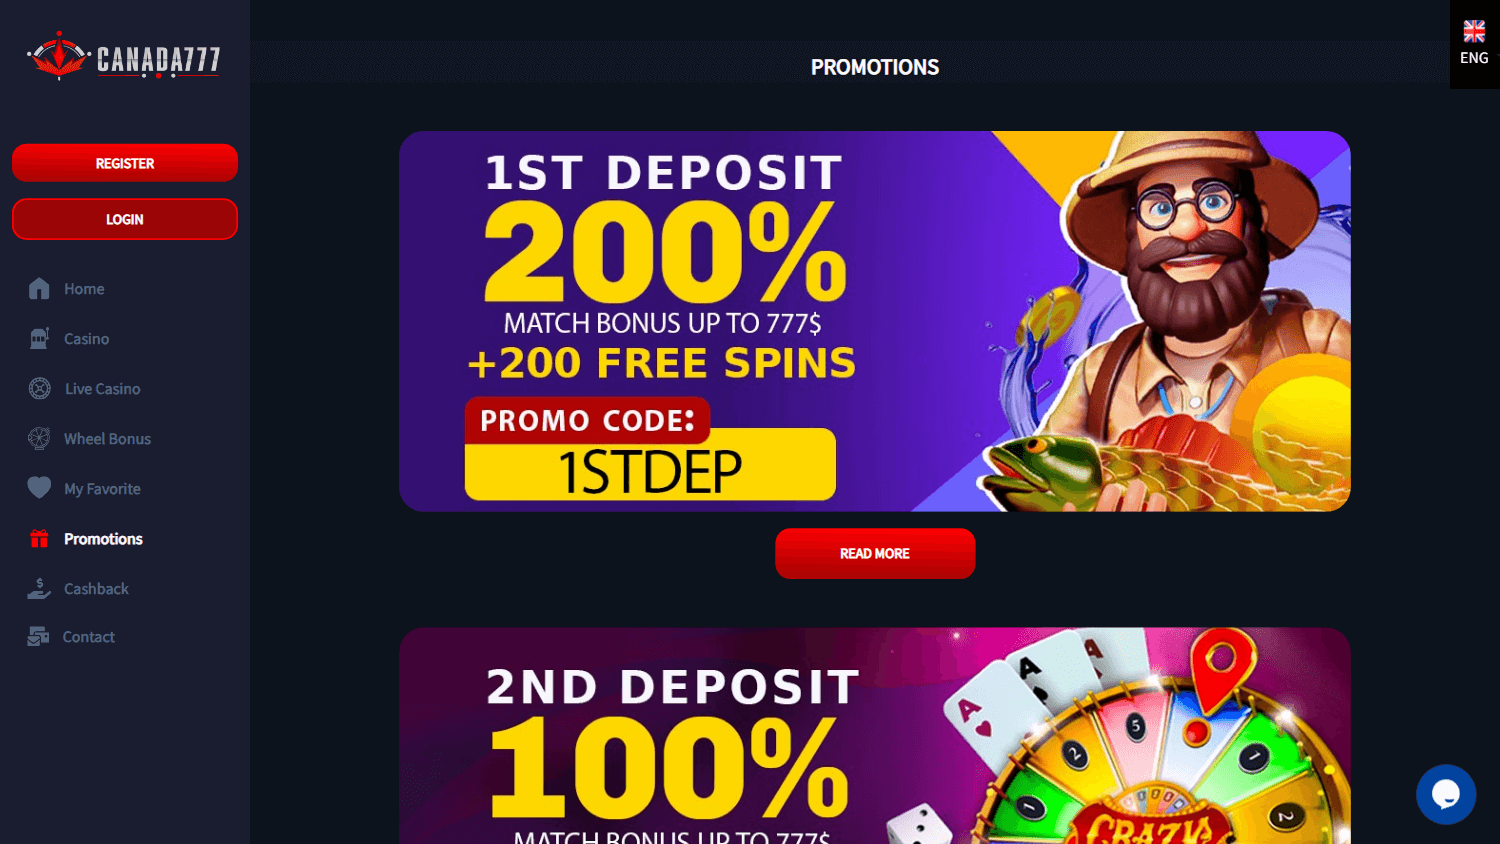 canada777_casino_promotions_desktop